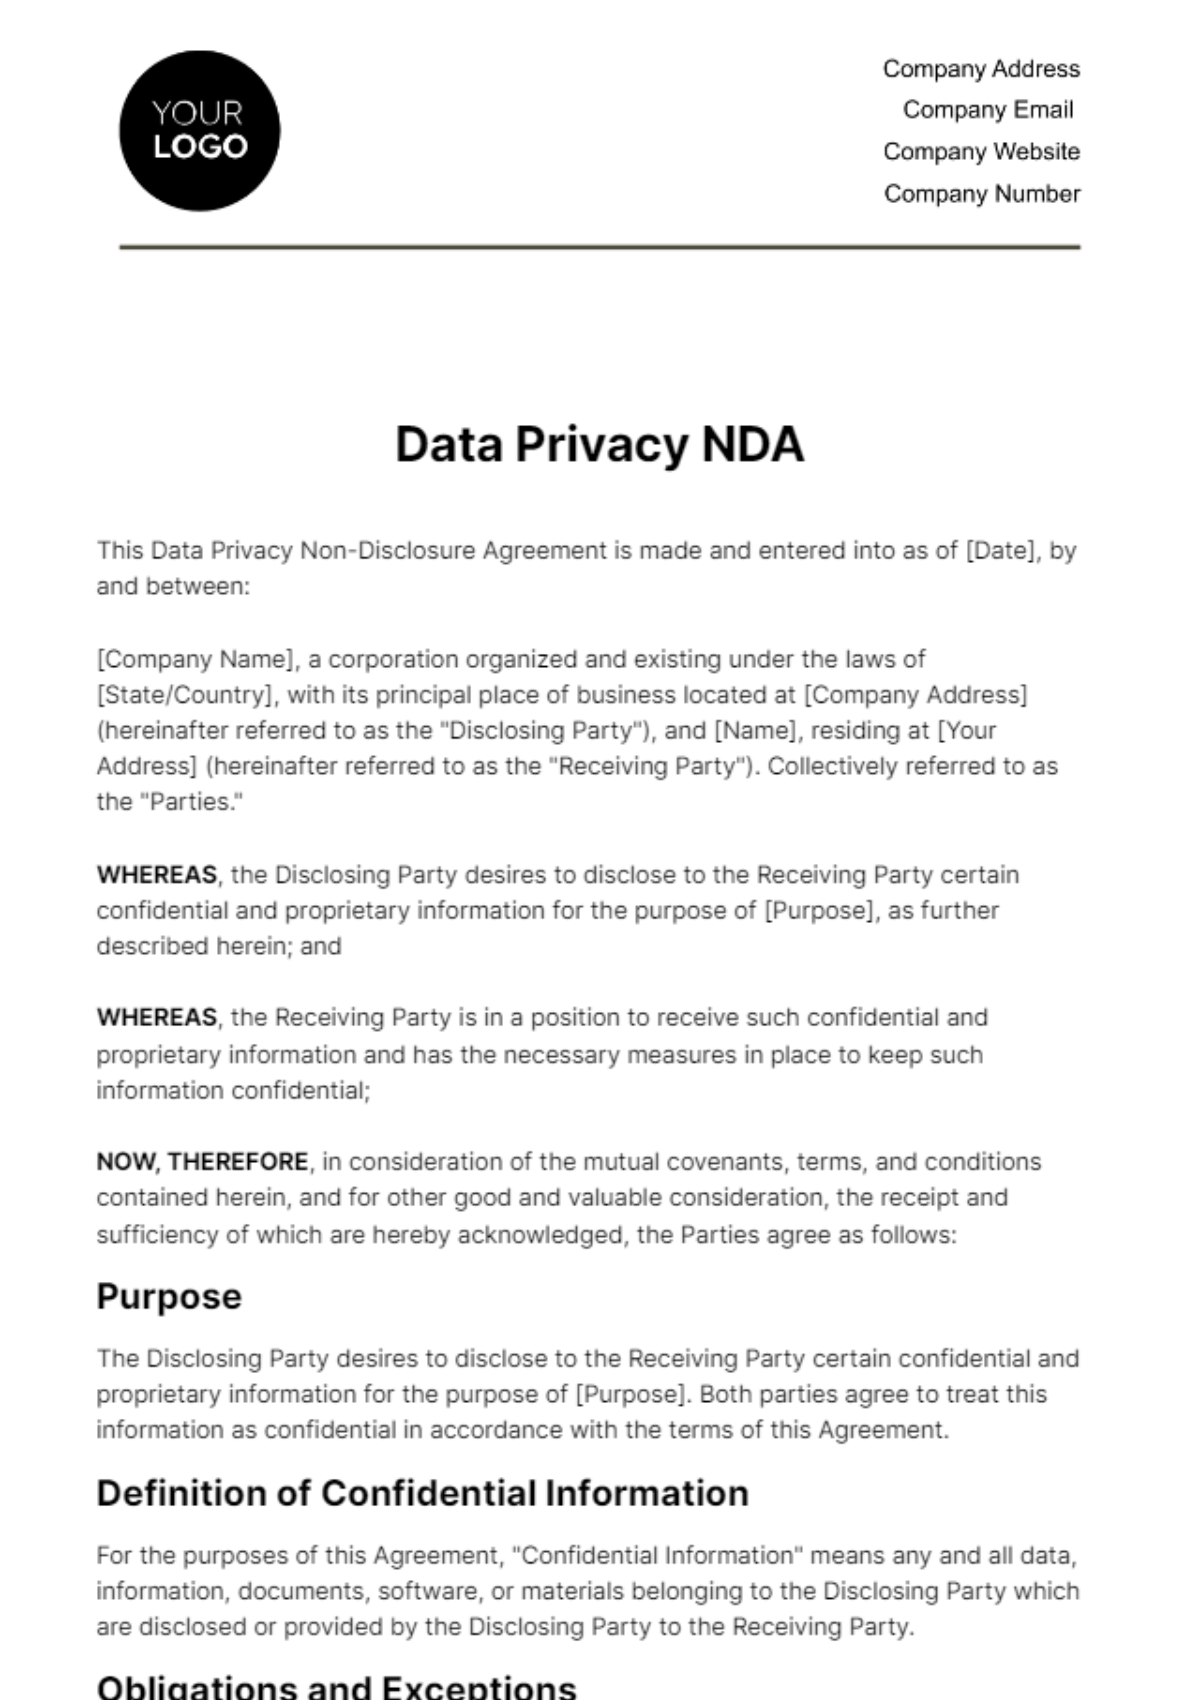 Free Data Privacy NDA HR Template